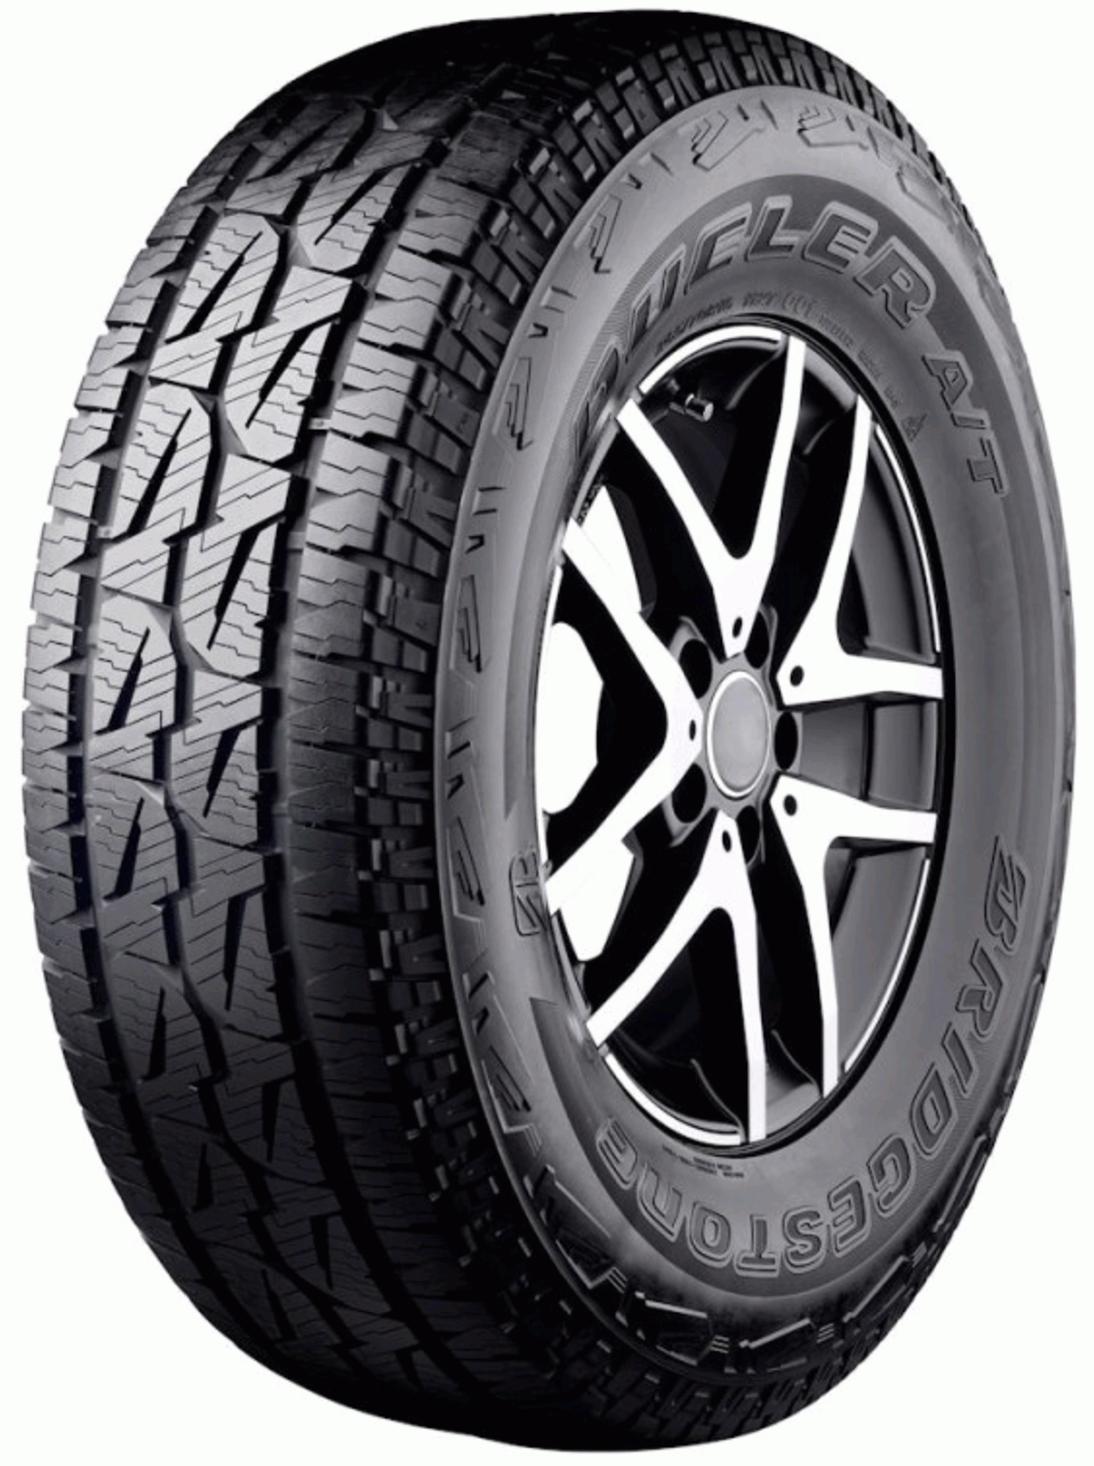 Bridgestone Dueler Reviews Tests AT and 001 - Tire